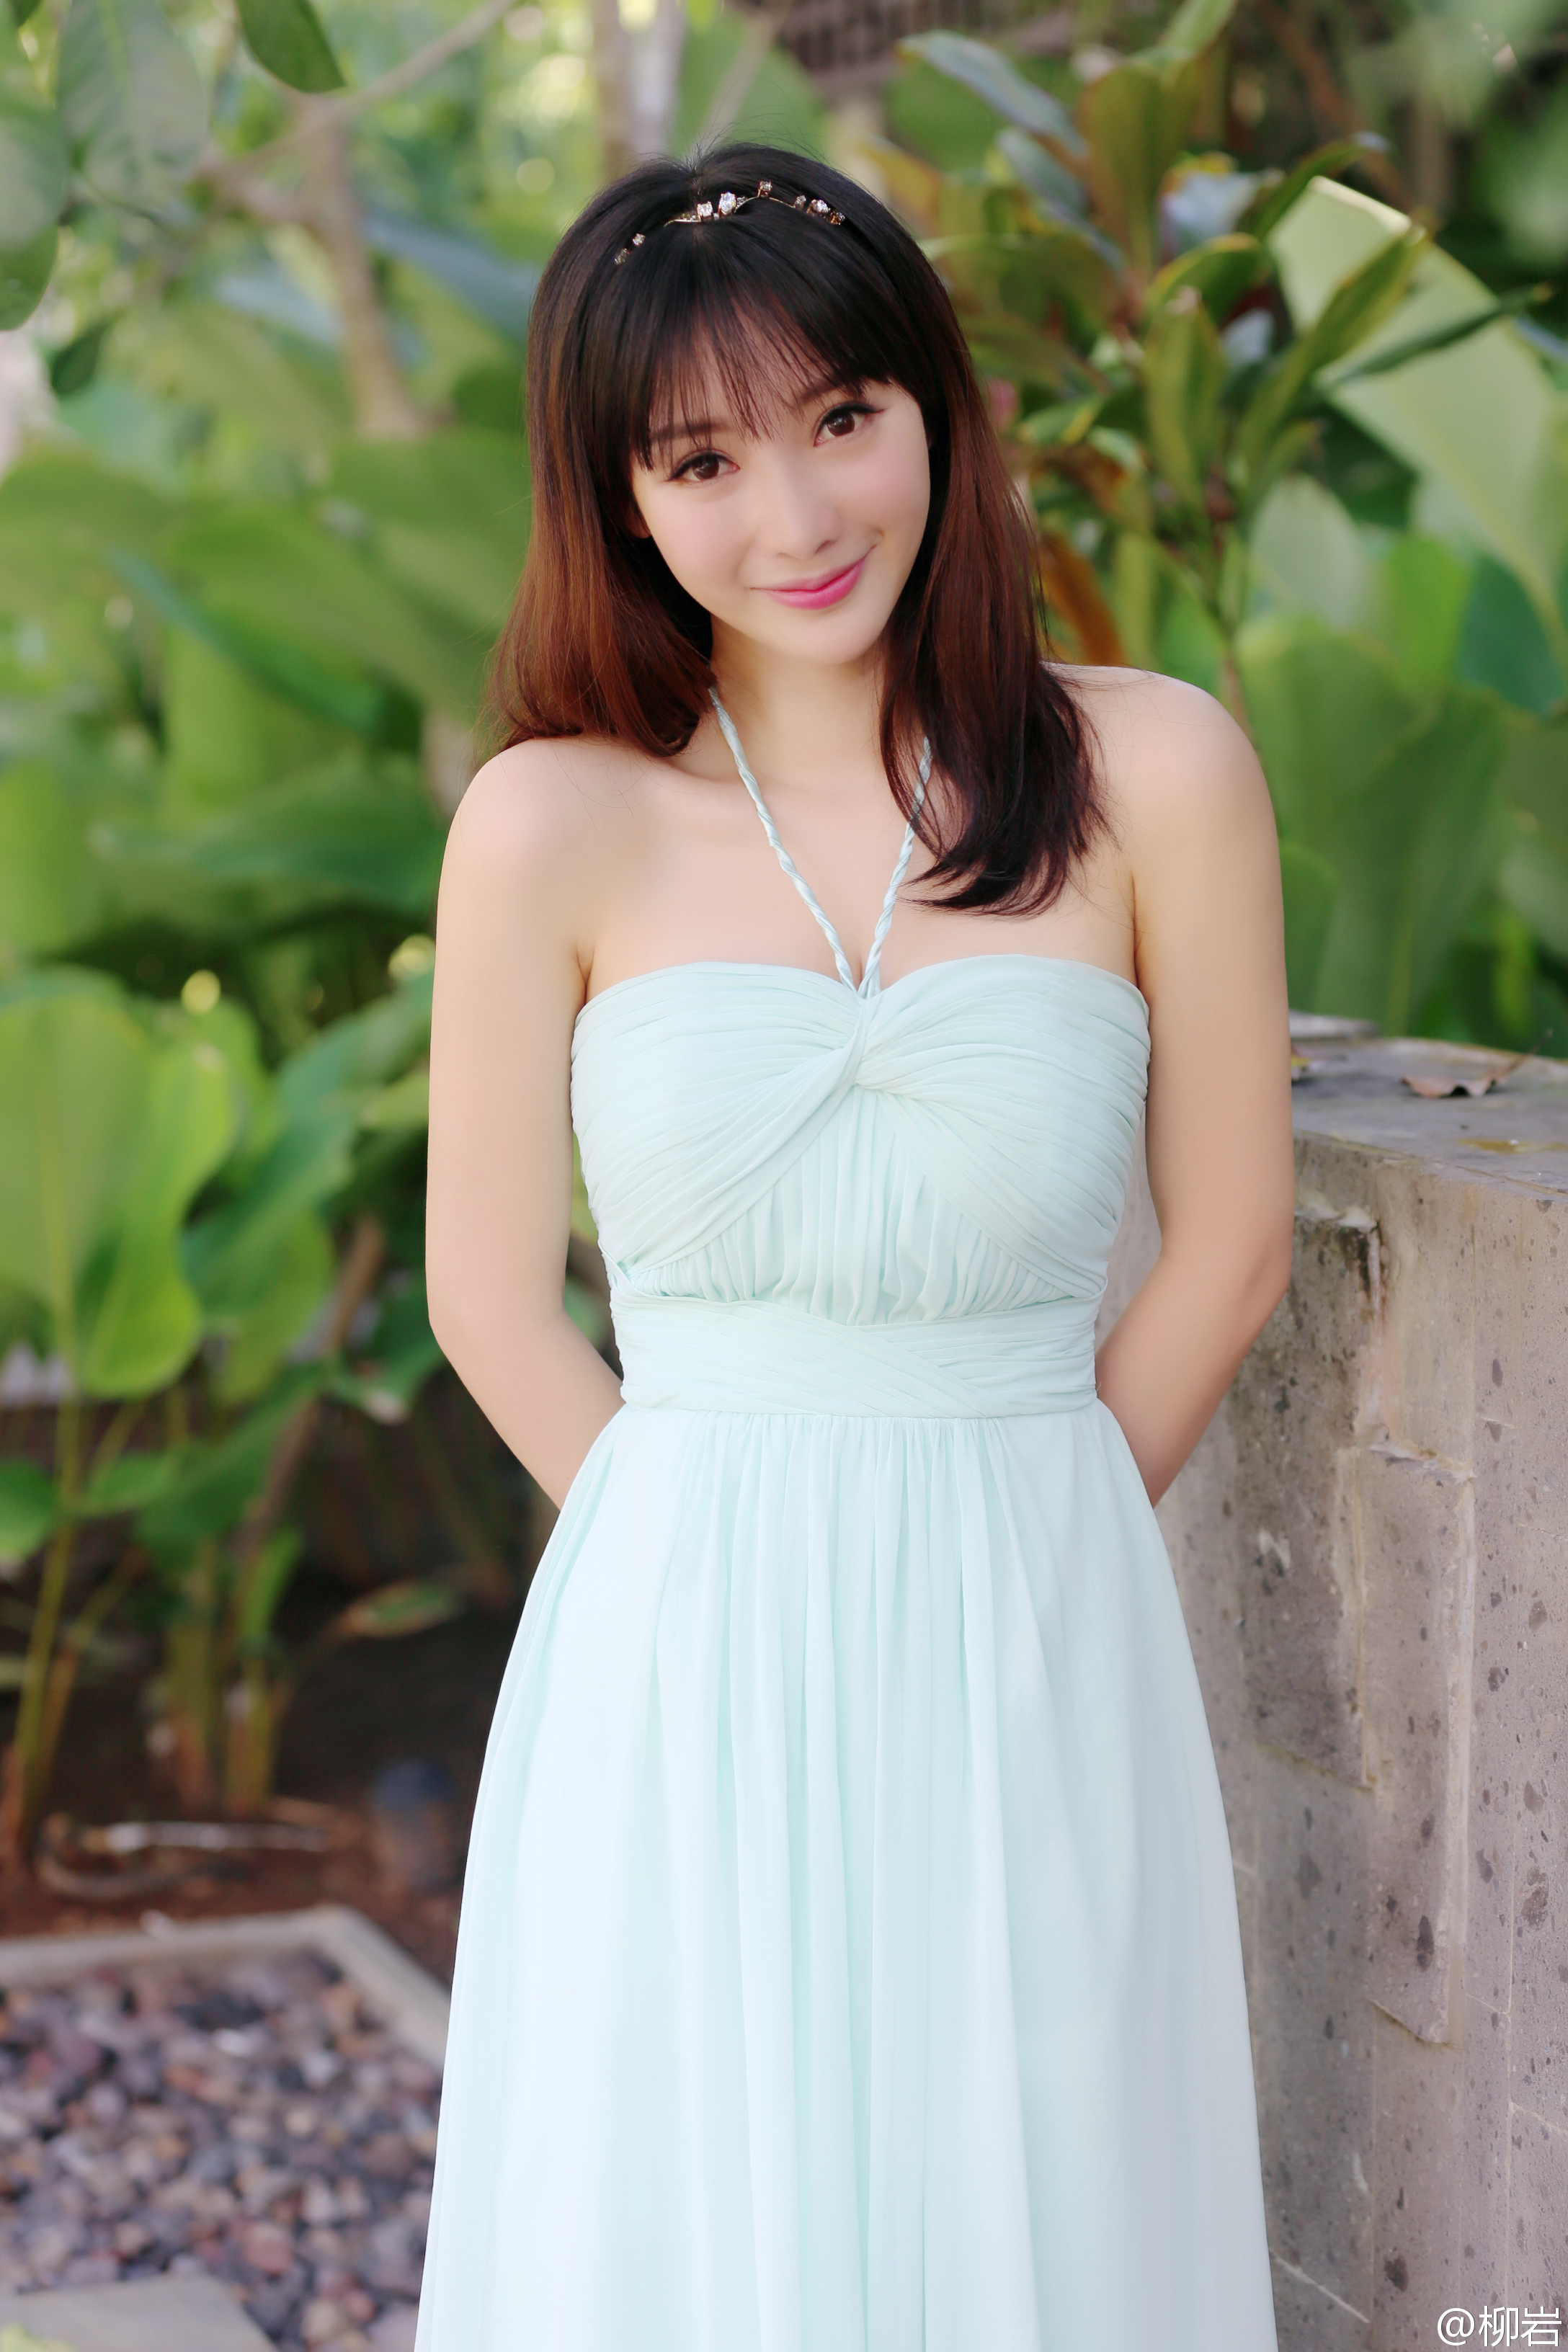 People 2176x3264 liuyan blue dress looking at viewer sunlight outdoors Chinese smiling Asian women